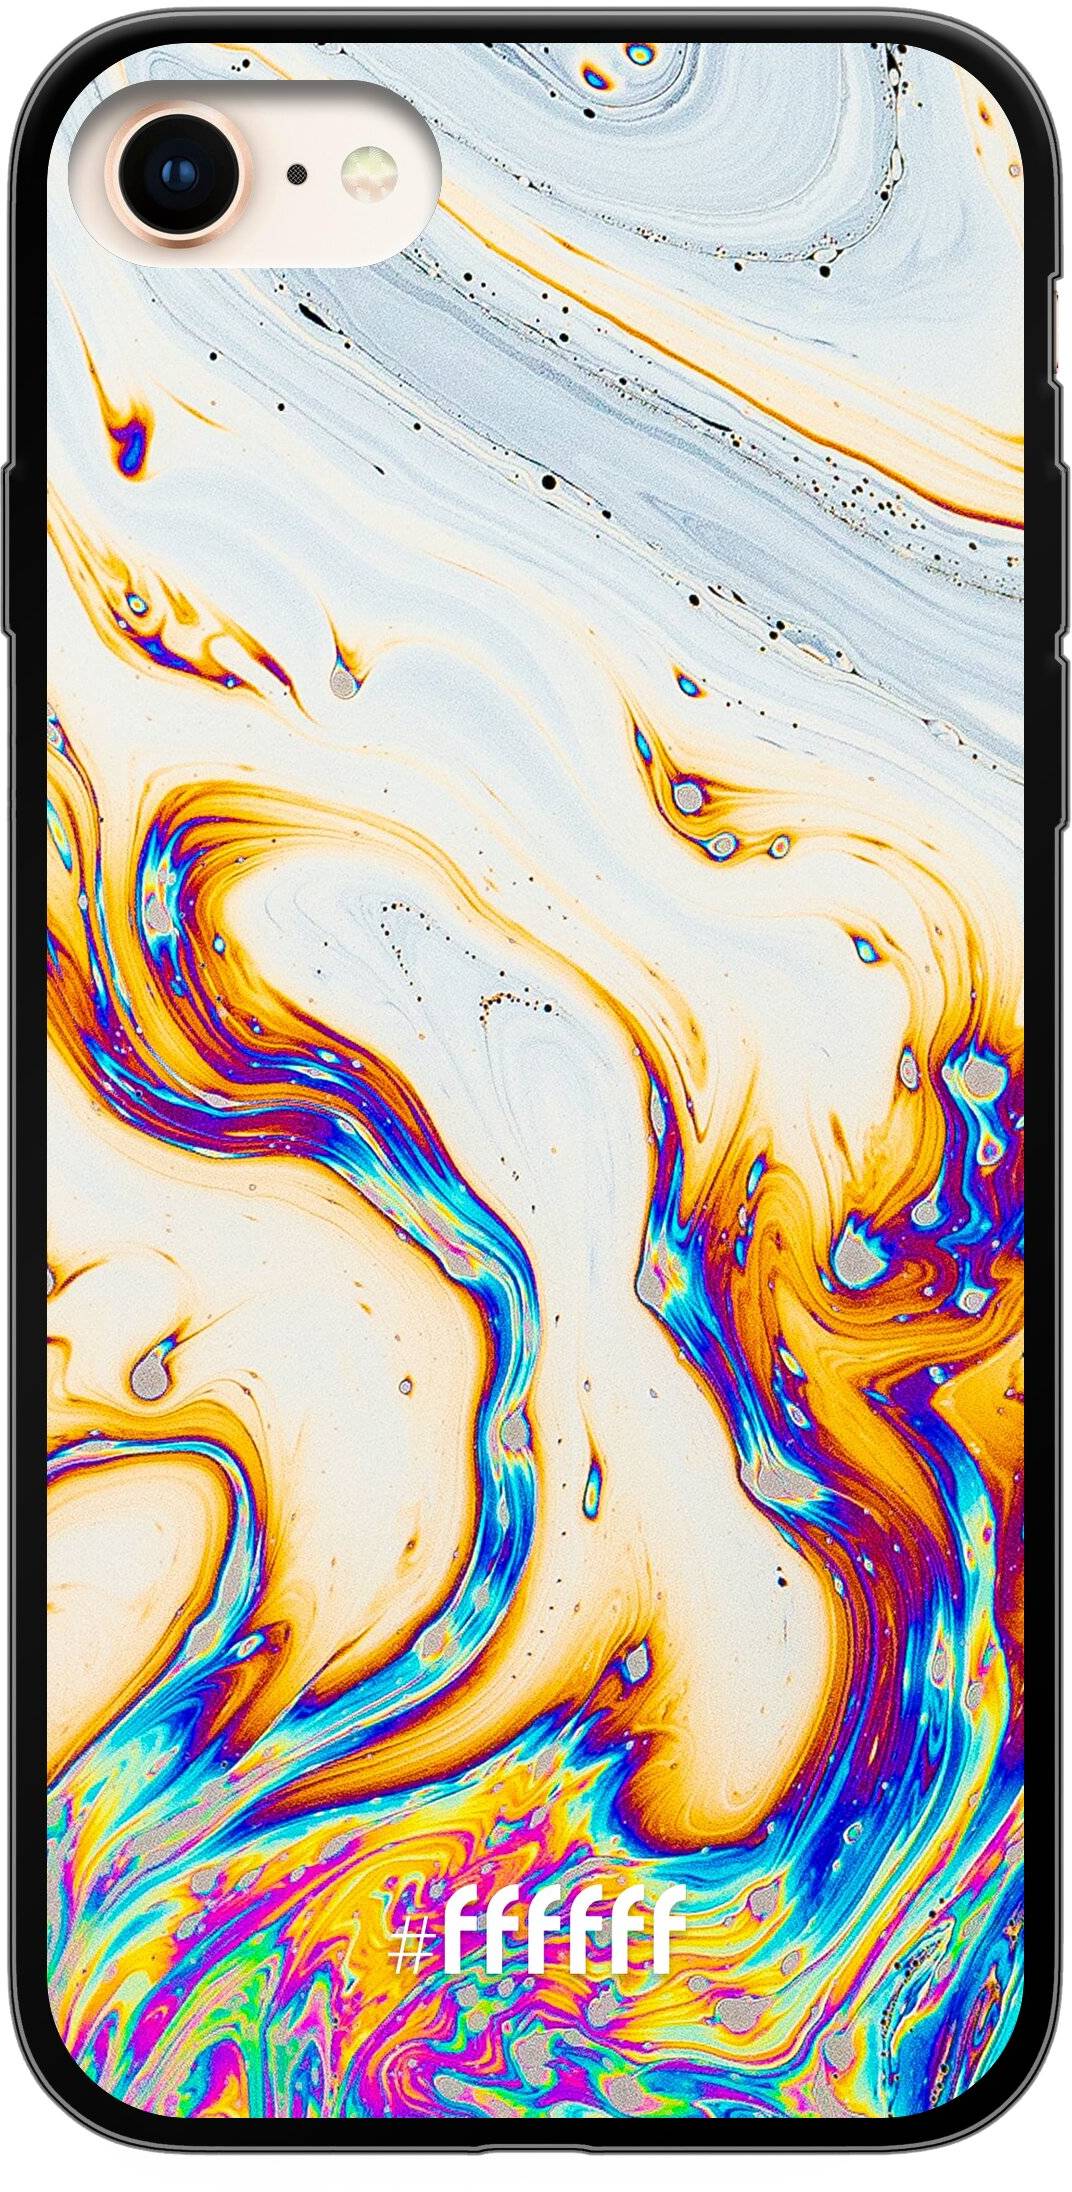 Bubble Texture iPhone 7